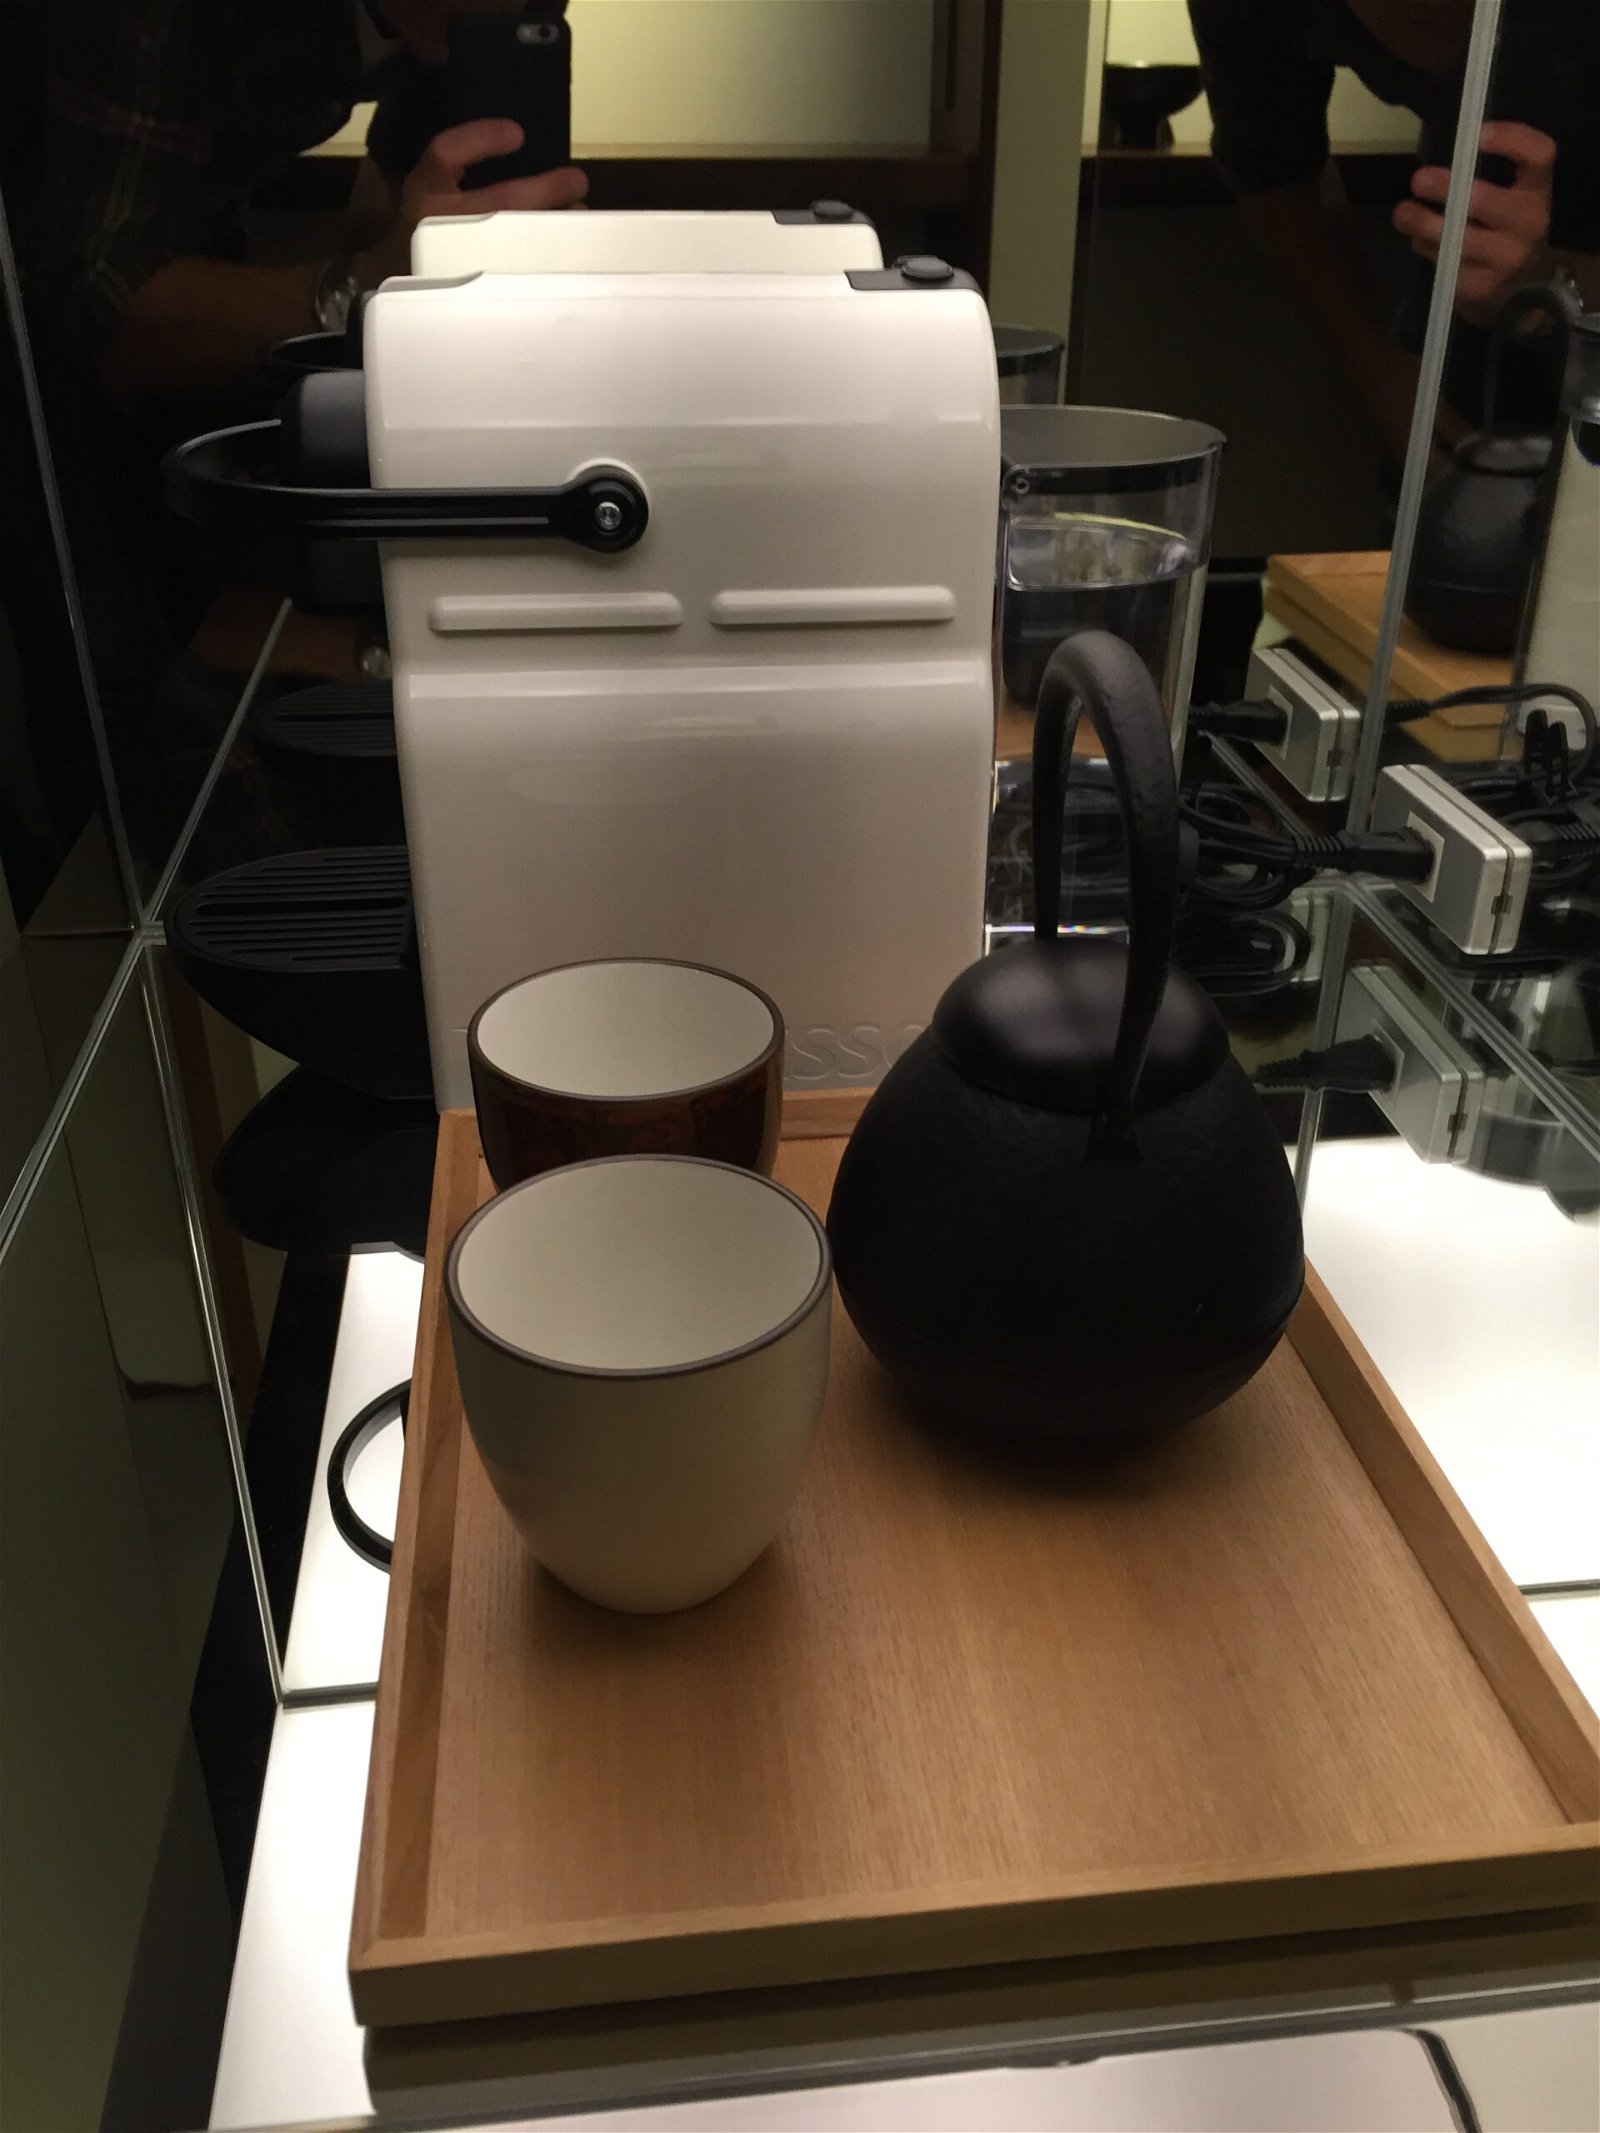 Coffee and tea set